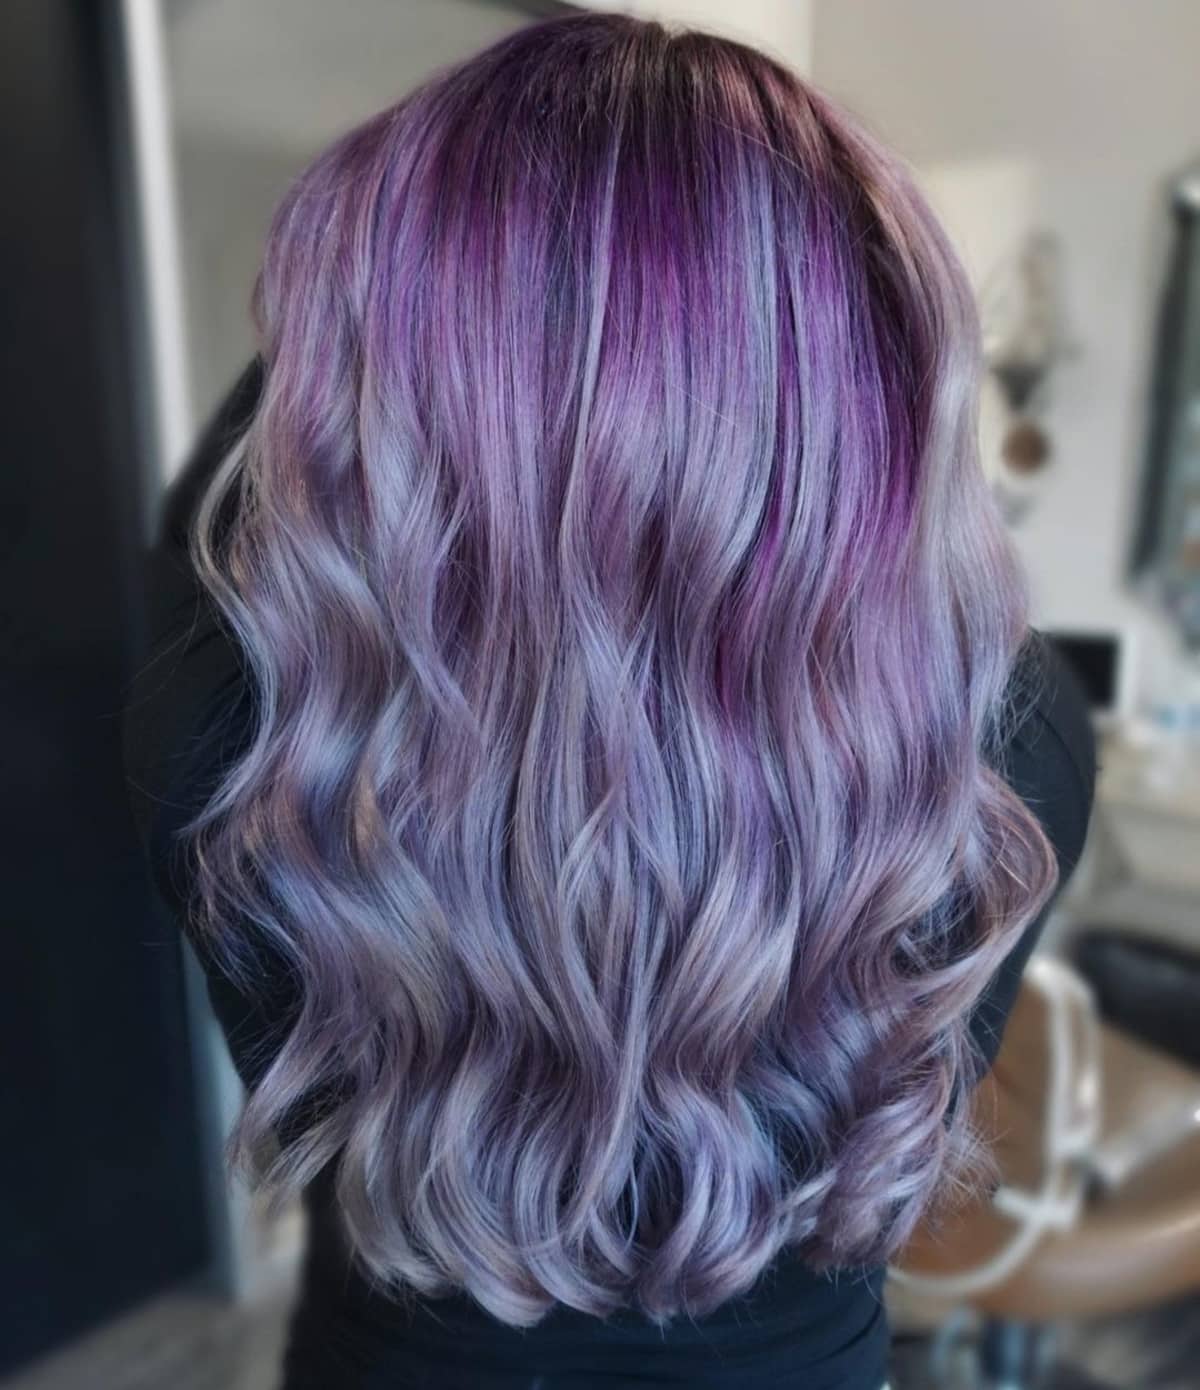 Silver hair with purple streaks